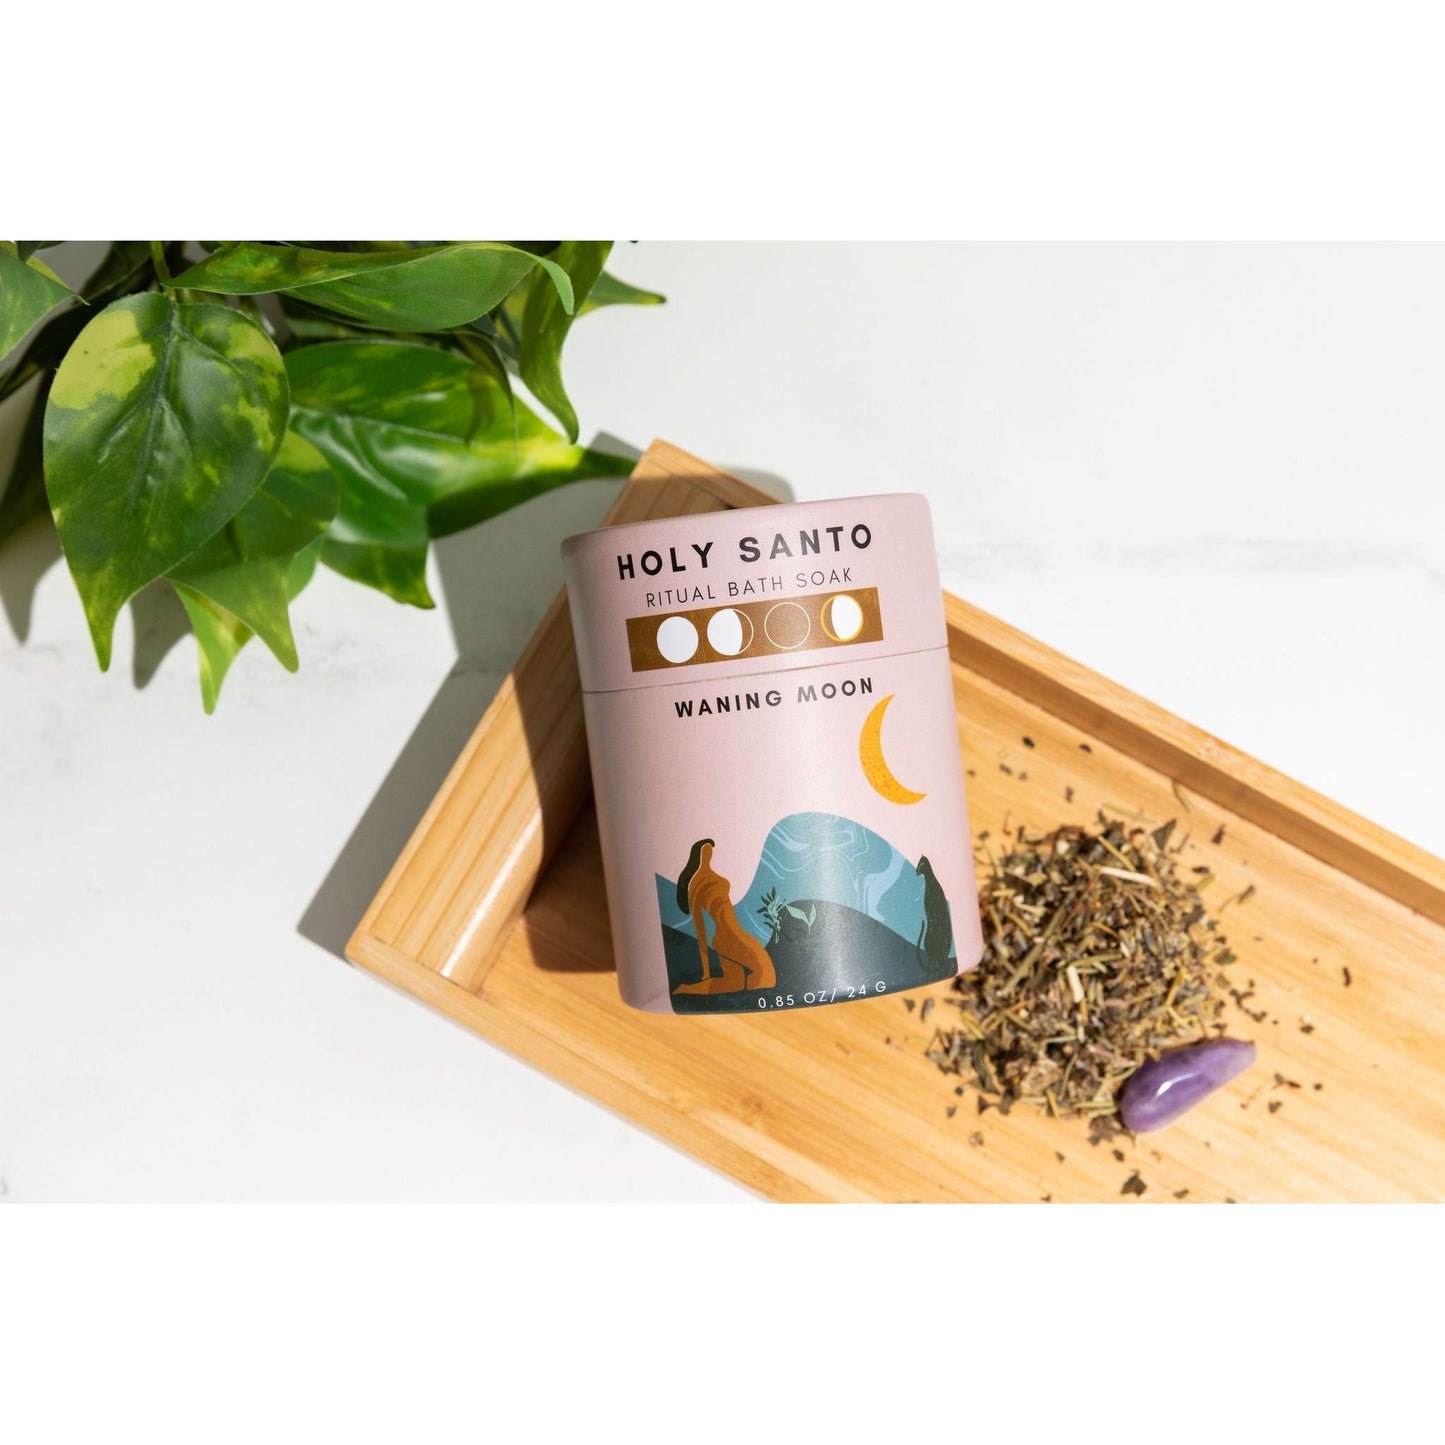 Moon Phase Organic Bath Soak with Dried Herbs and Flowers - Ritual